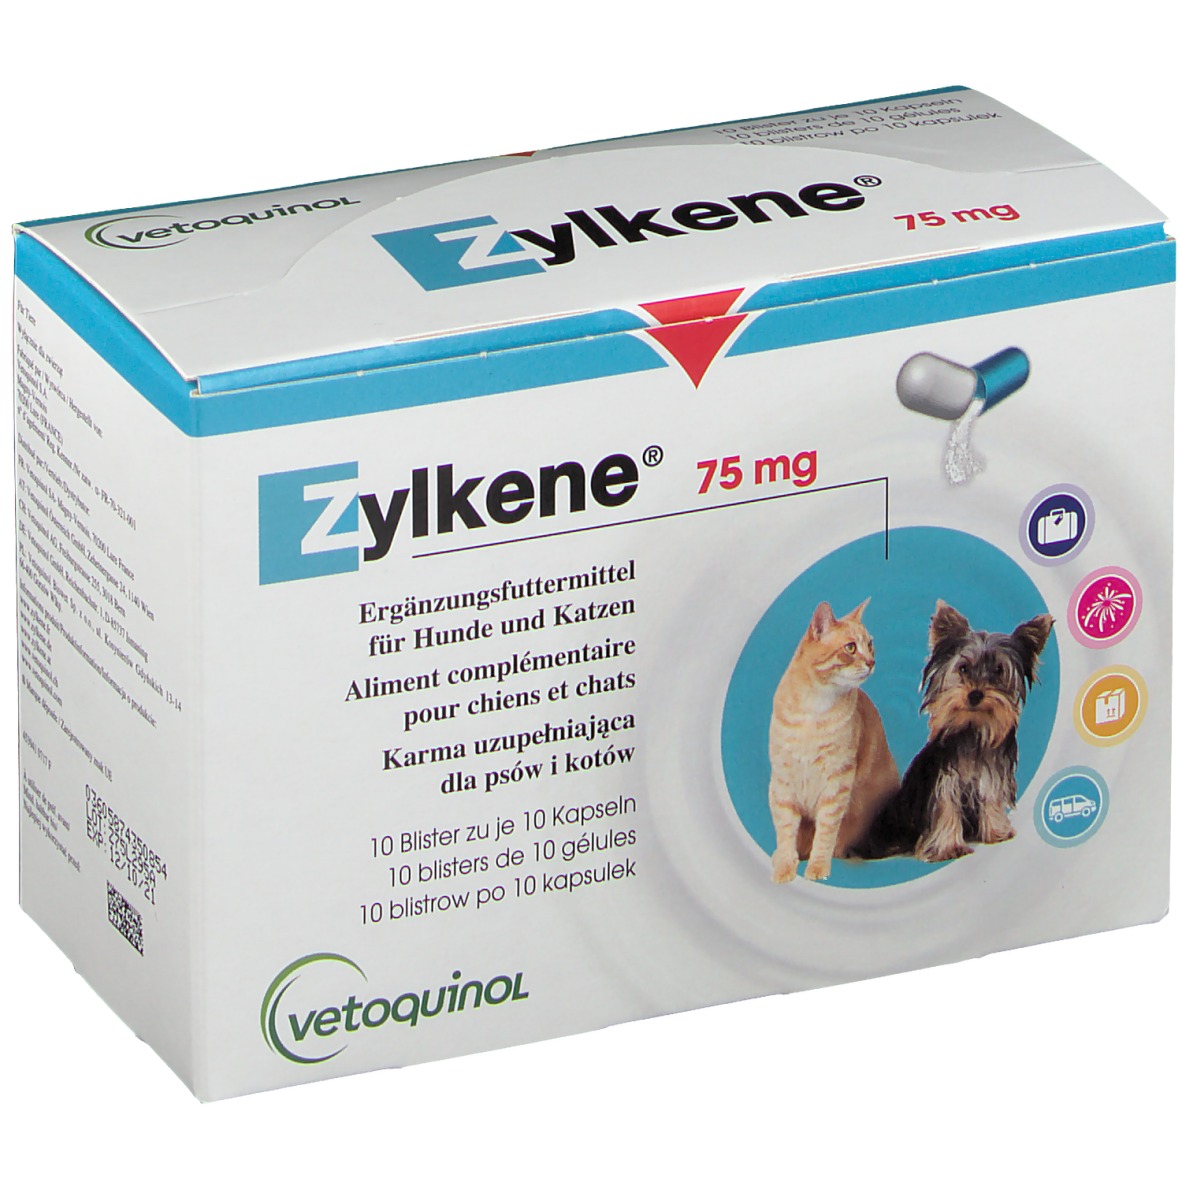 zylk-ne-75-mg-f-r-hunde-und-katzen-shop-apotheke-at